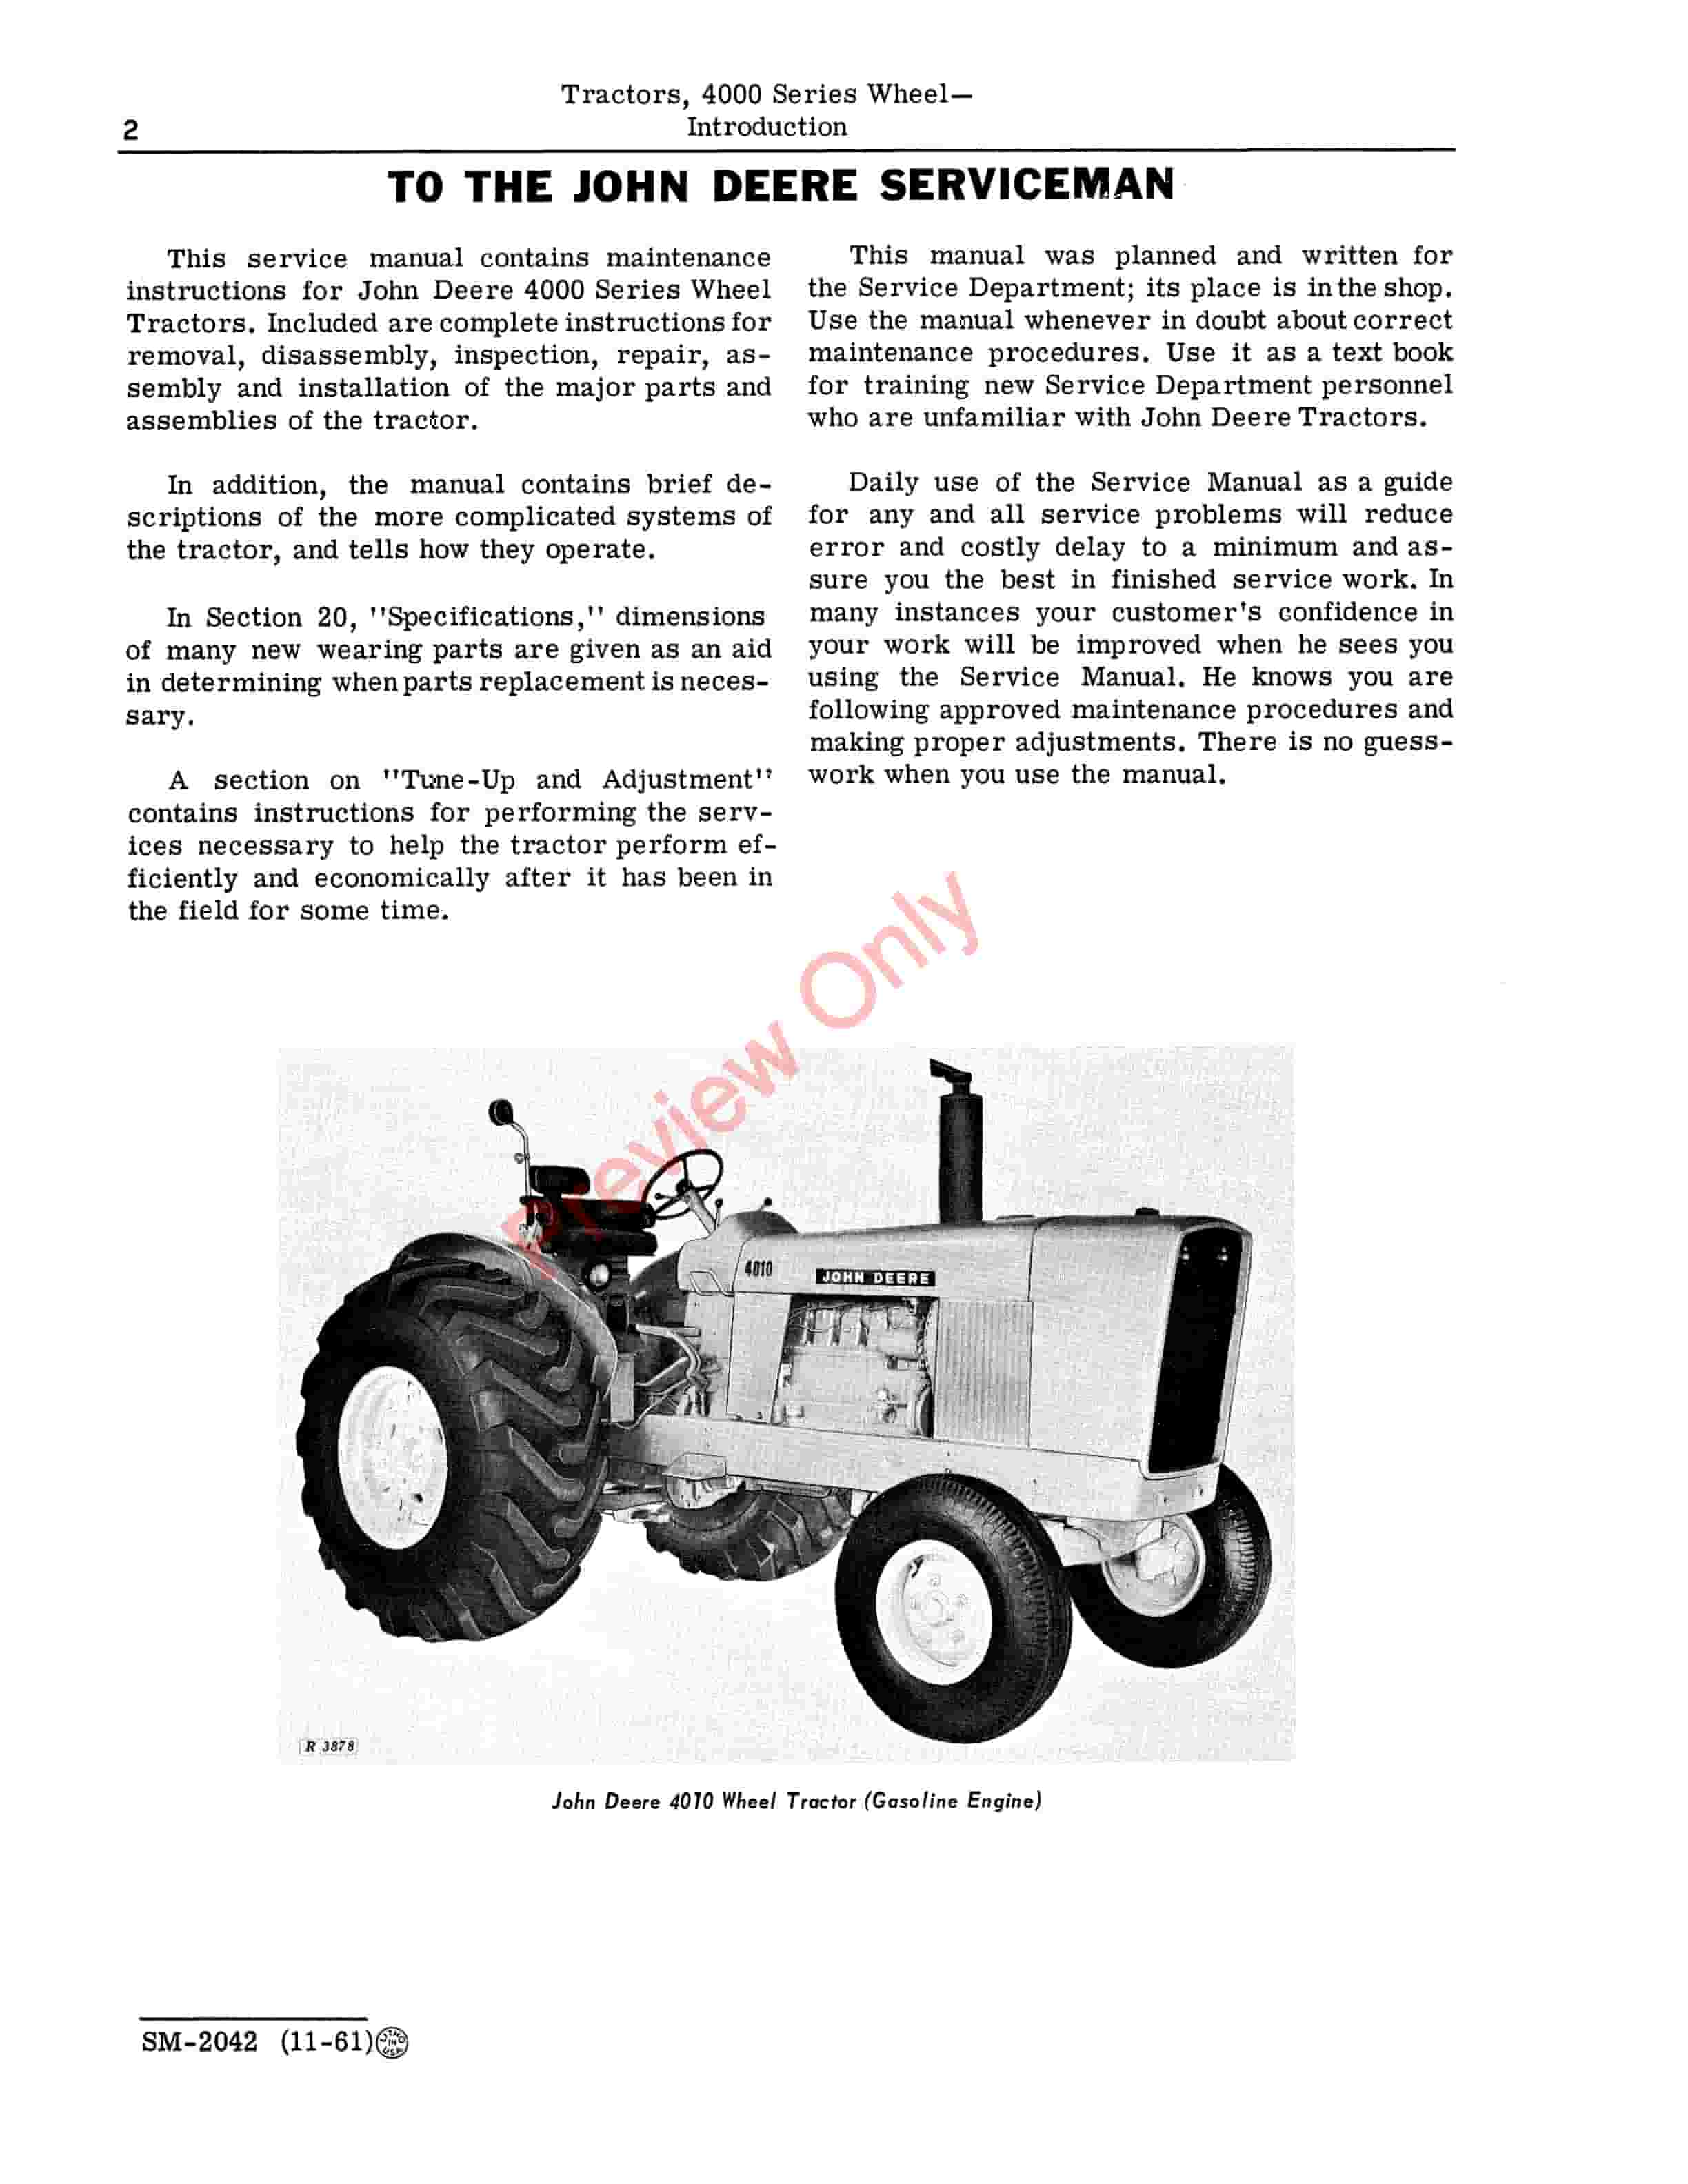 John Deere 4000 Series Wheel Tractors Service Manual SM2042 01NOV61 4